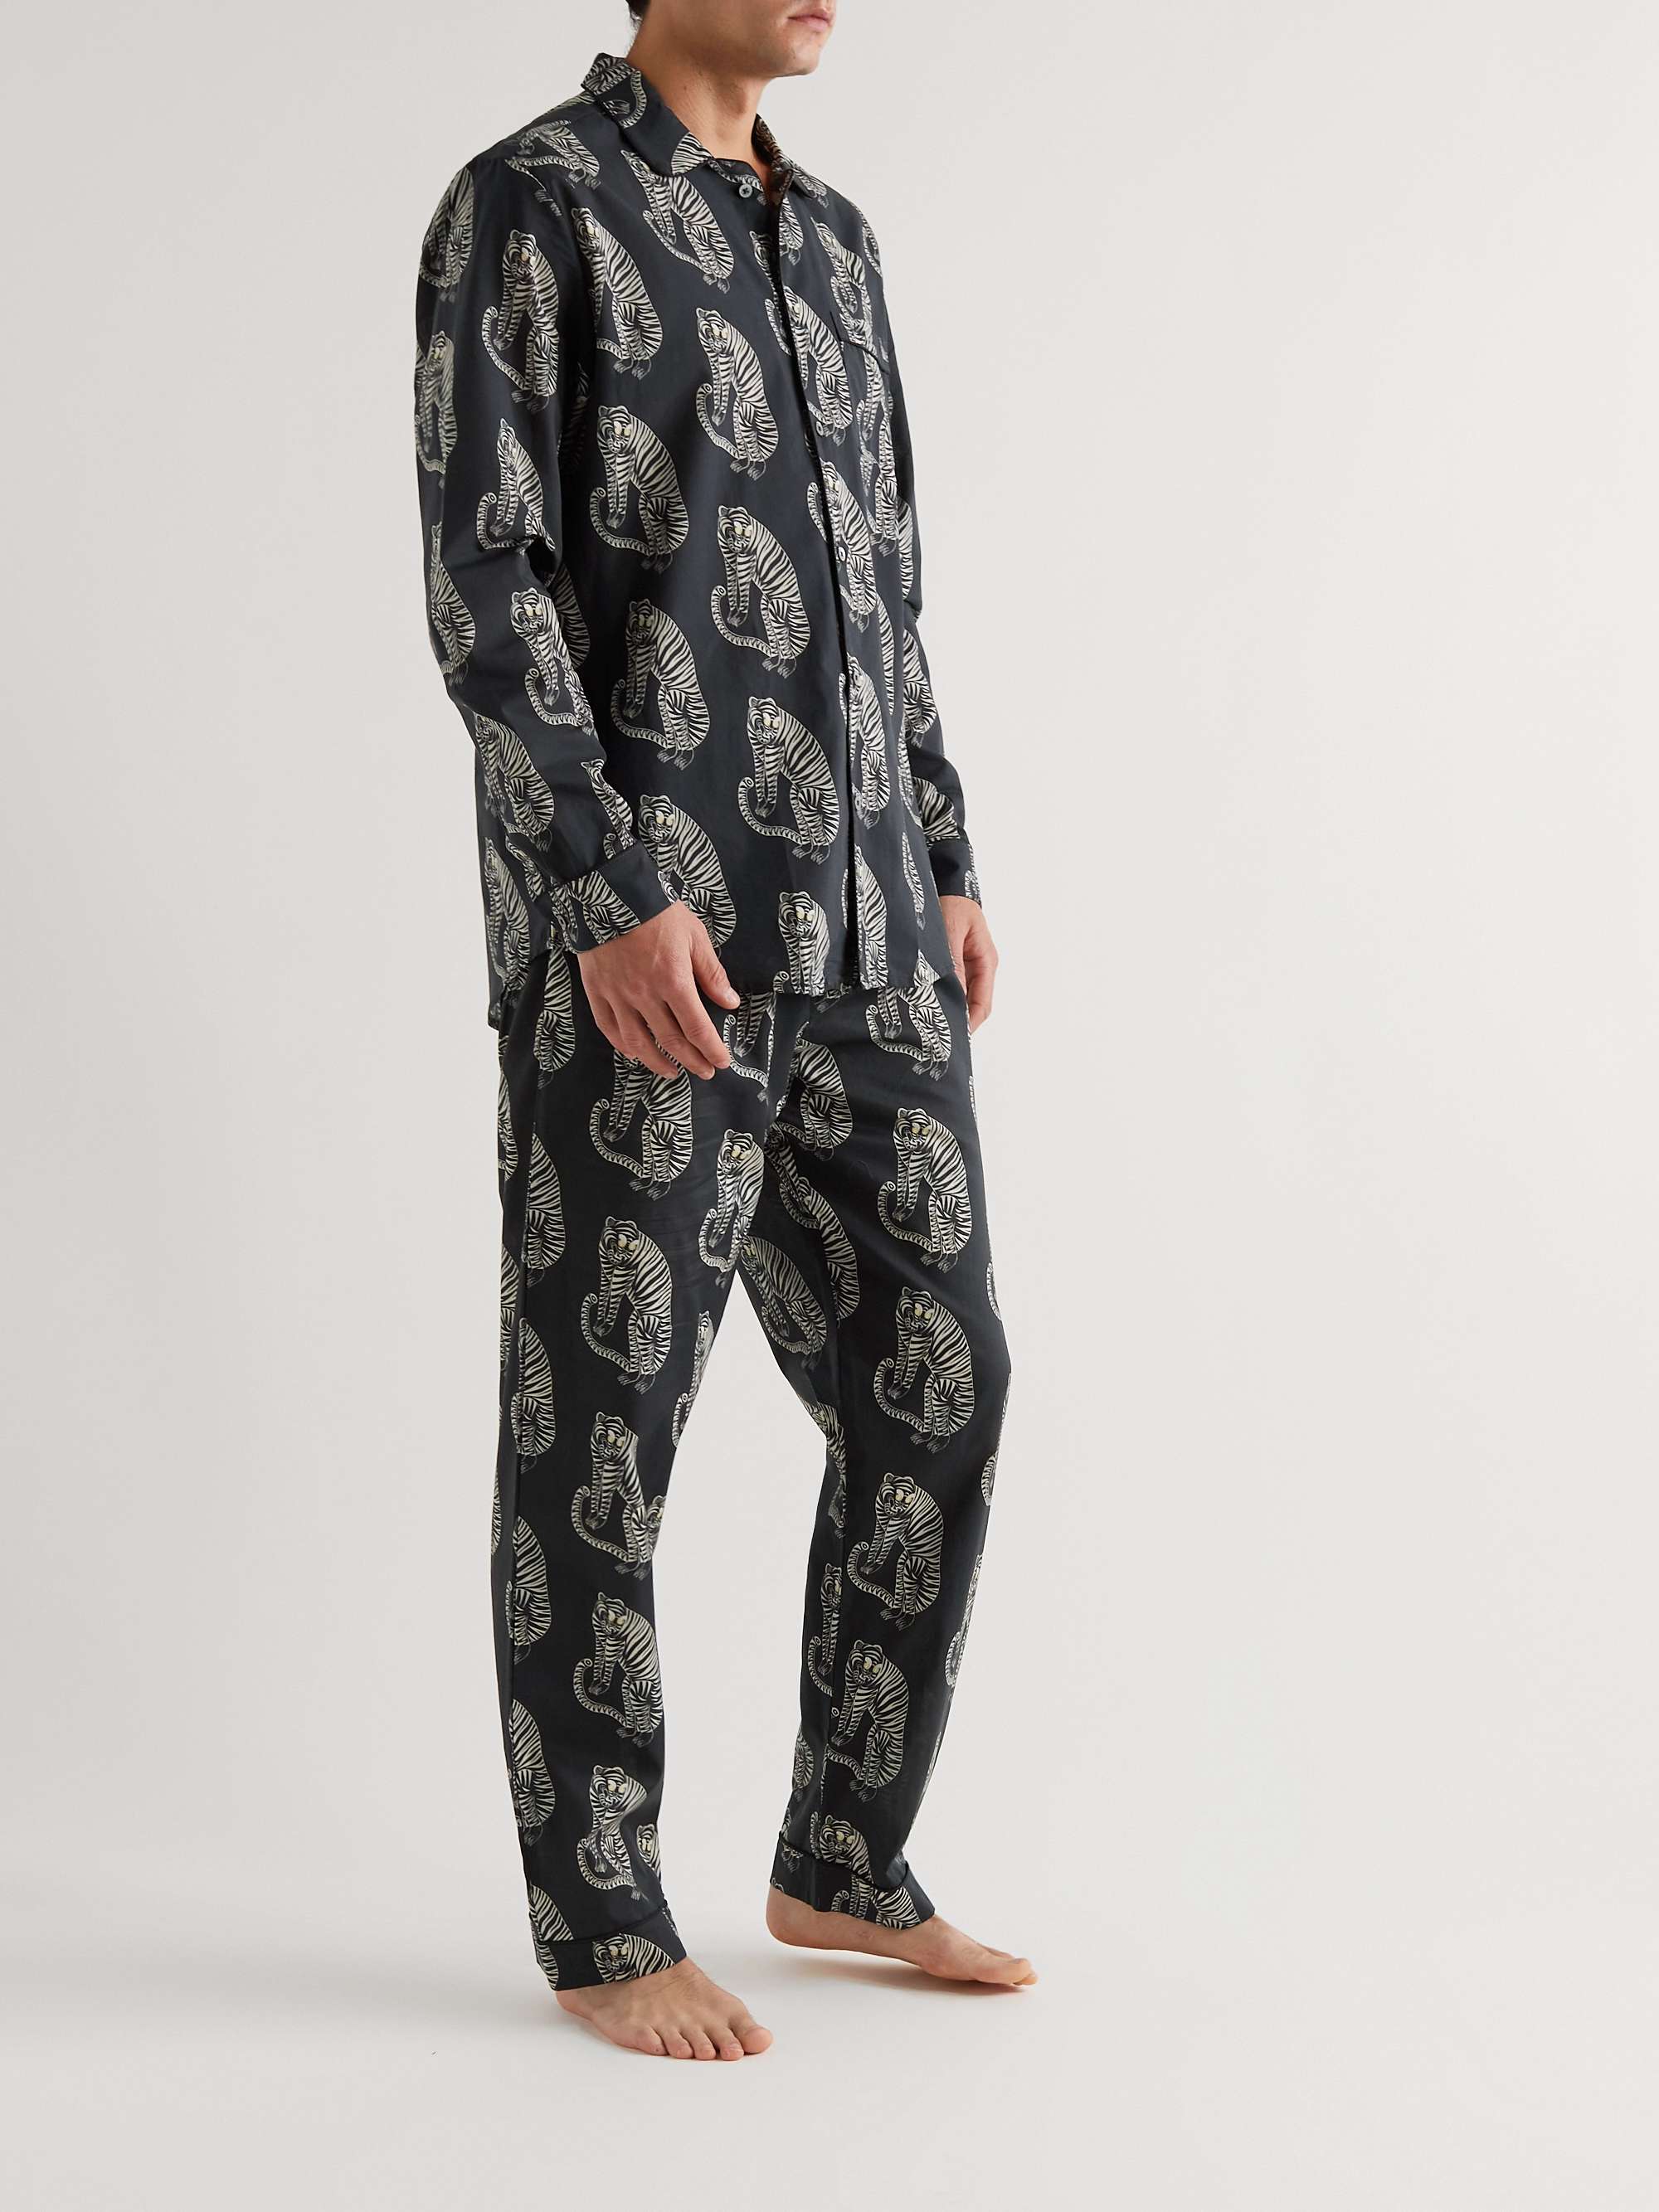 DESMOND & DEMPSEY Printed Cotton Pyjama Trousers